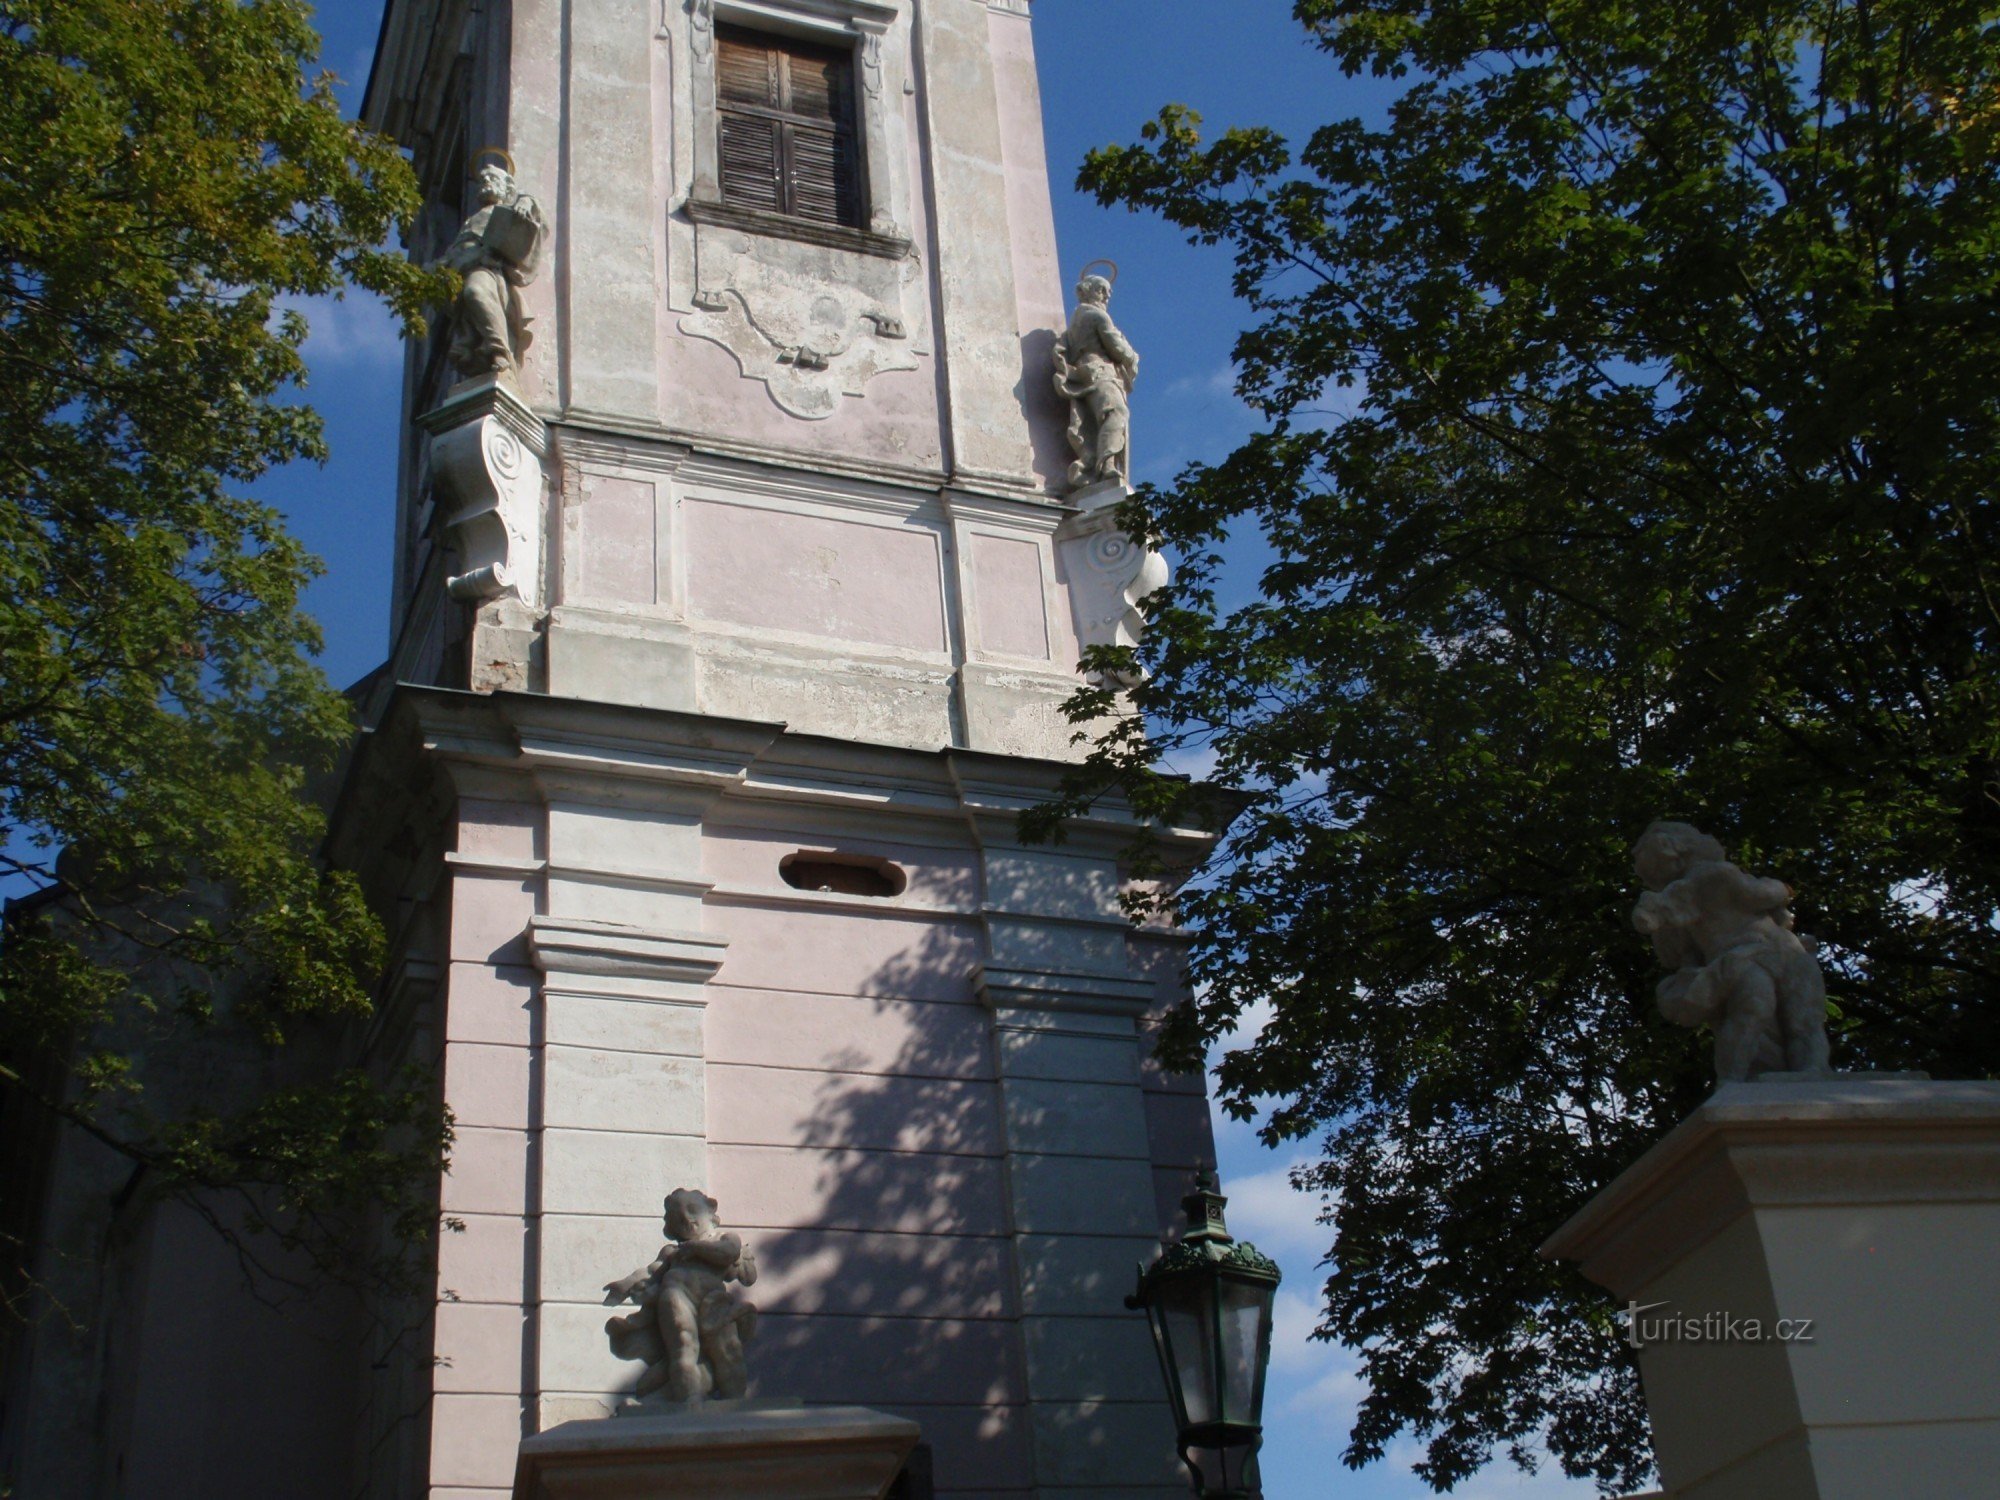 Kipi Aleksandra Jelíneka v Tasovu